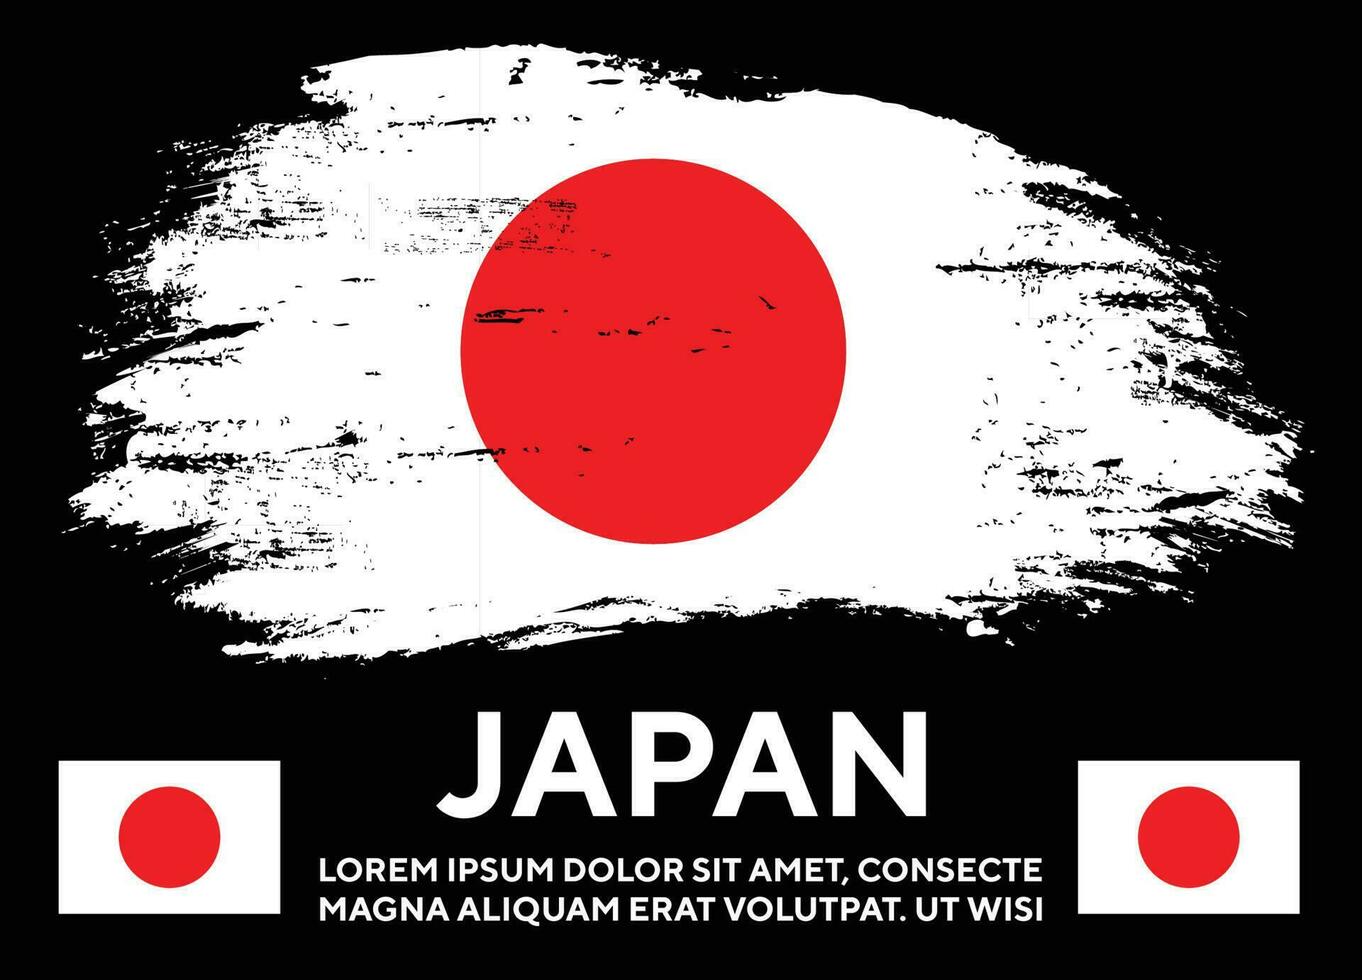 vetor de design de bandeira de estilo de onda de textura grunge japonesa colorida